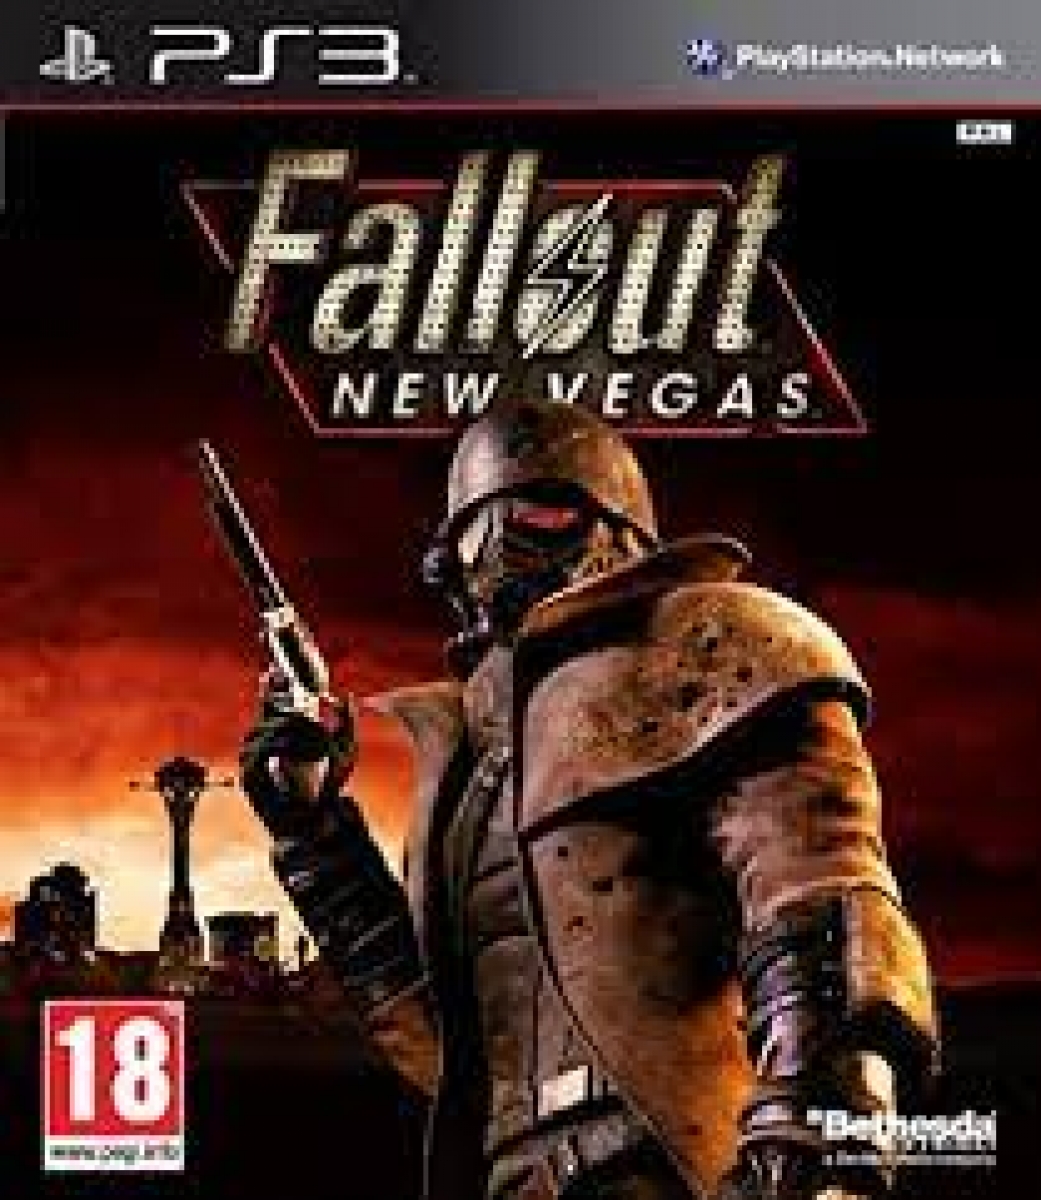 Fallout New Vegas PS3